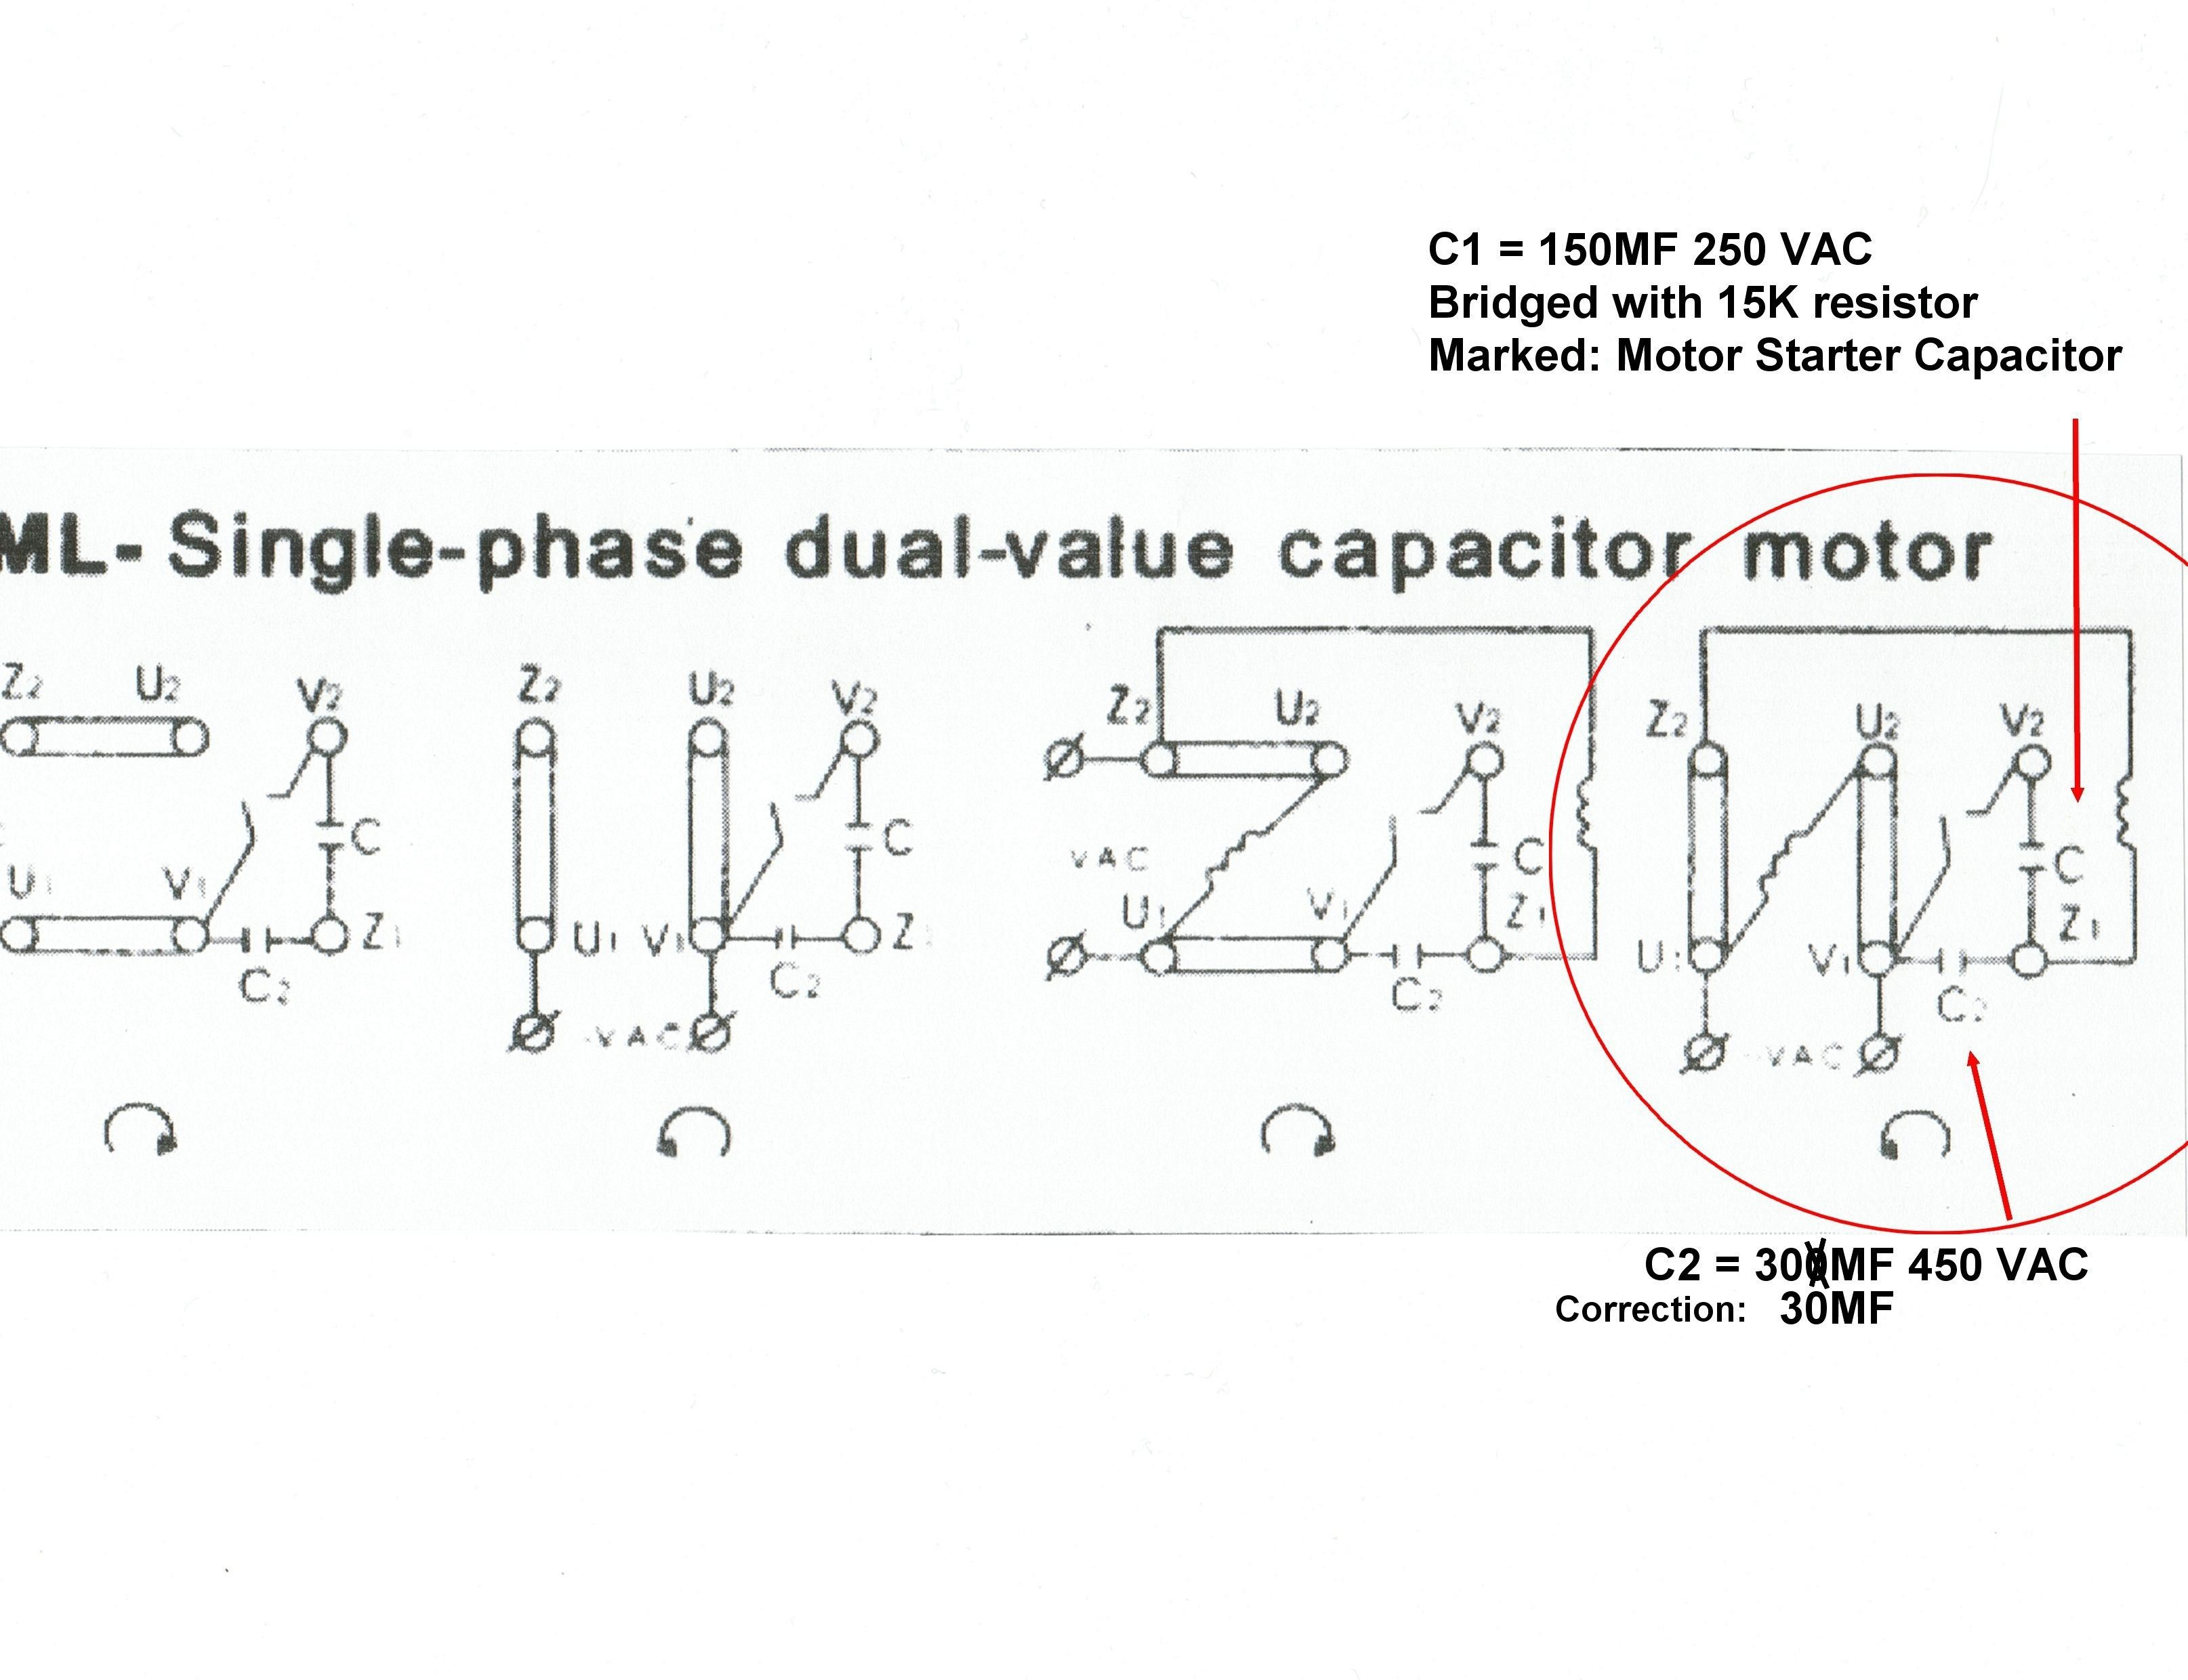 Wiring Diagram Single Phase Motor 6 Lead | Wiring Diagram - 6 Lead Single Phase Motor Wiring Diagram